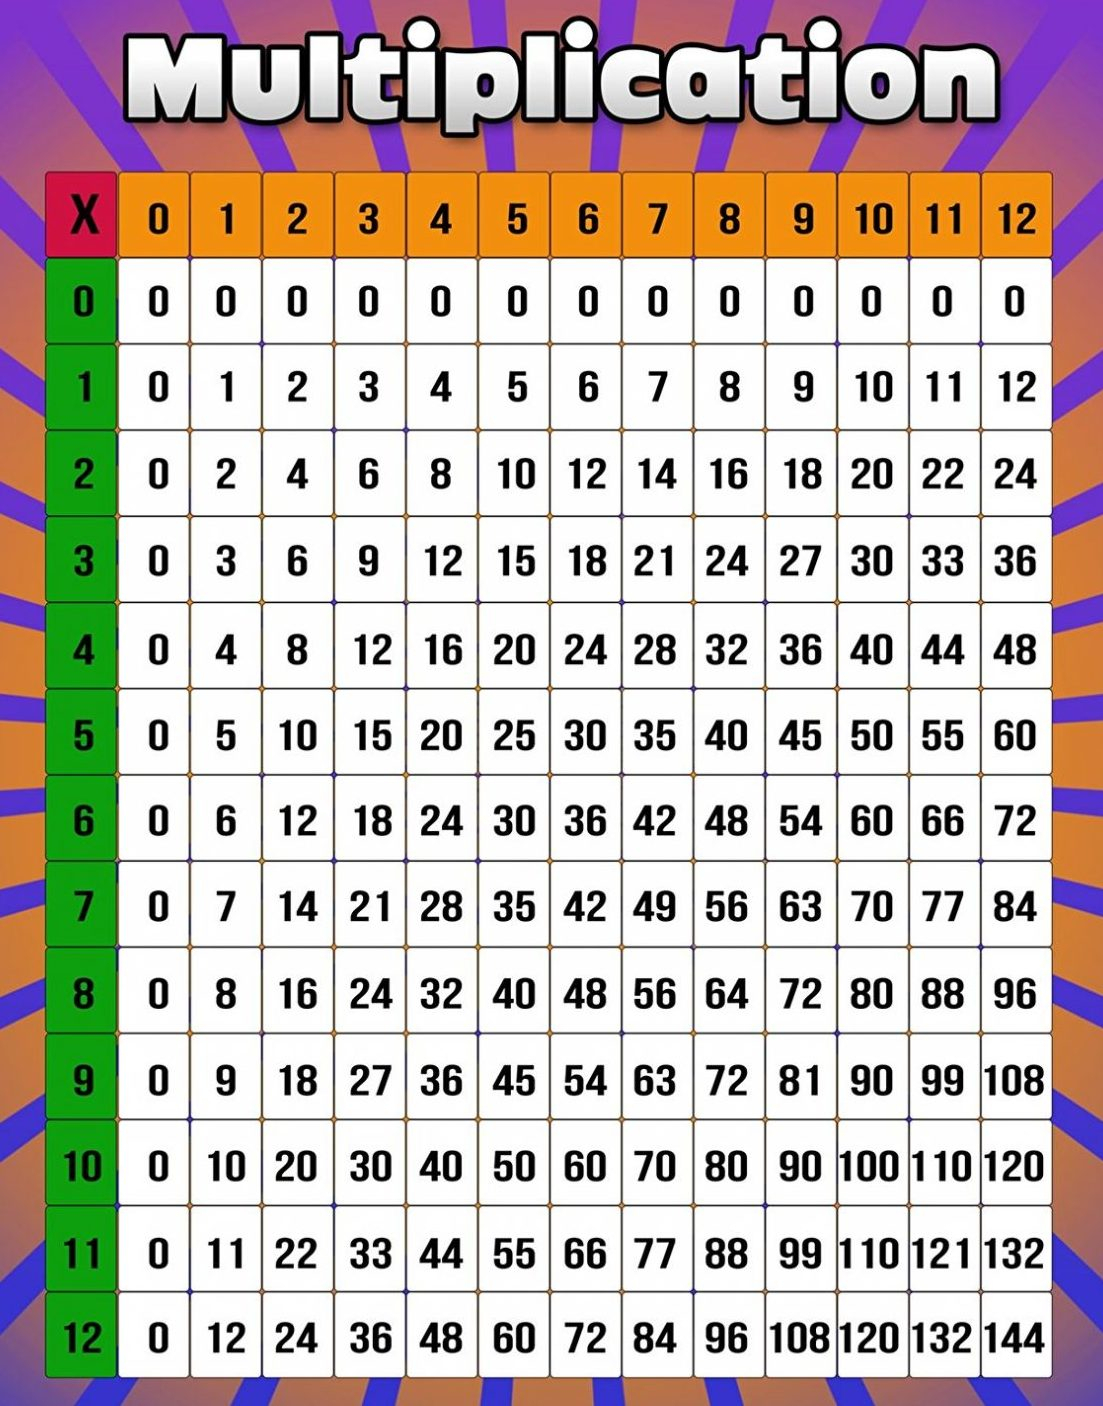 multiplication table printable pdf